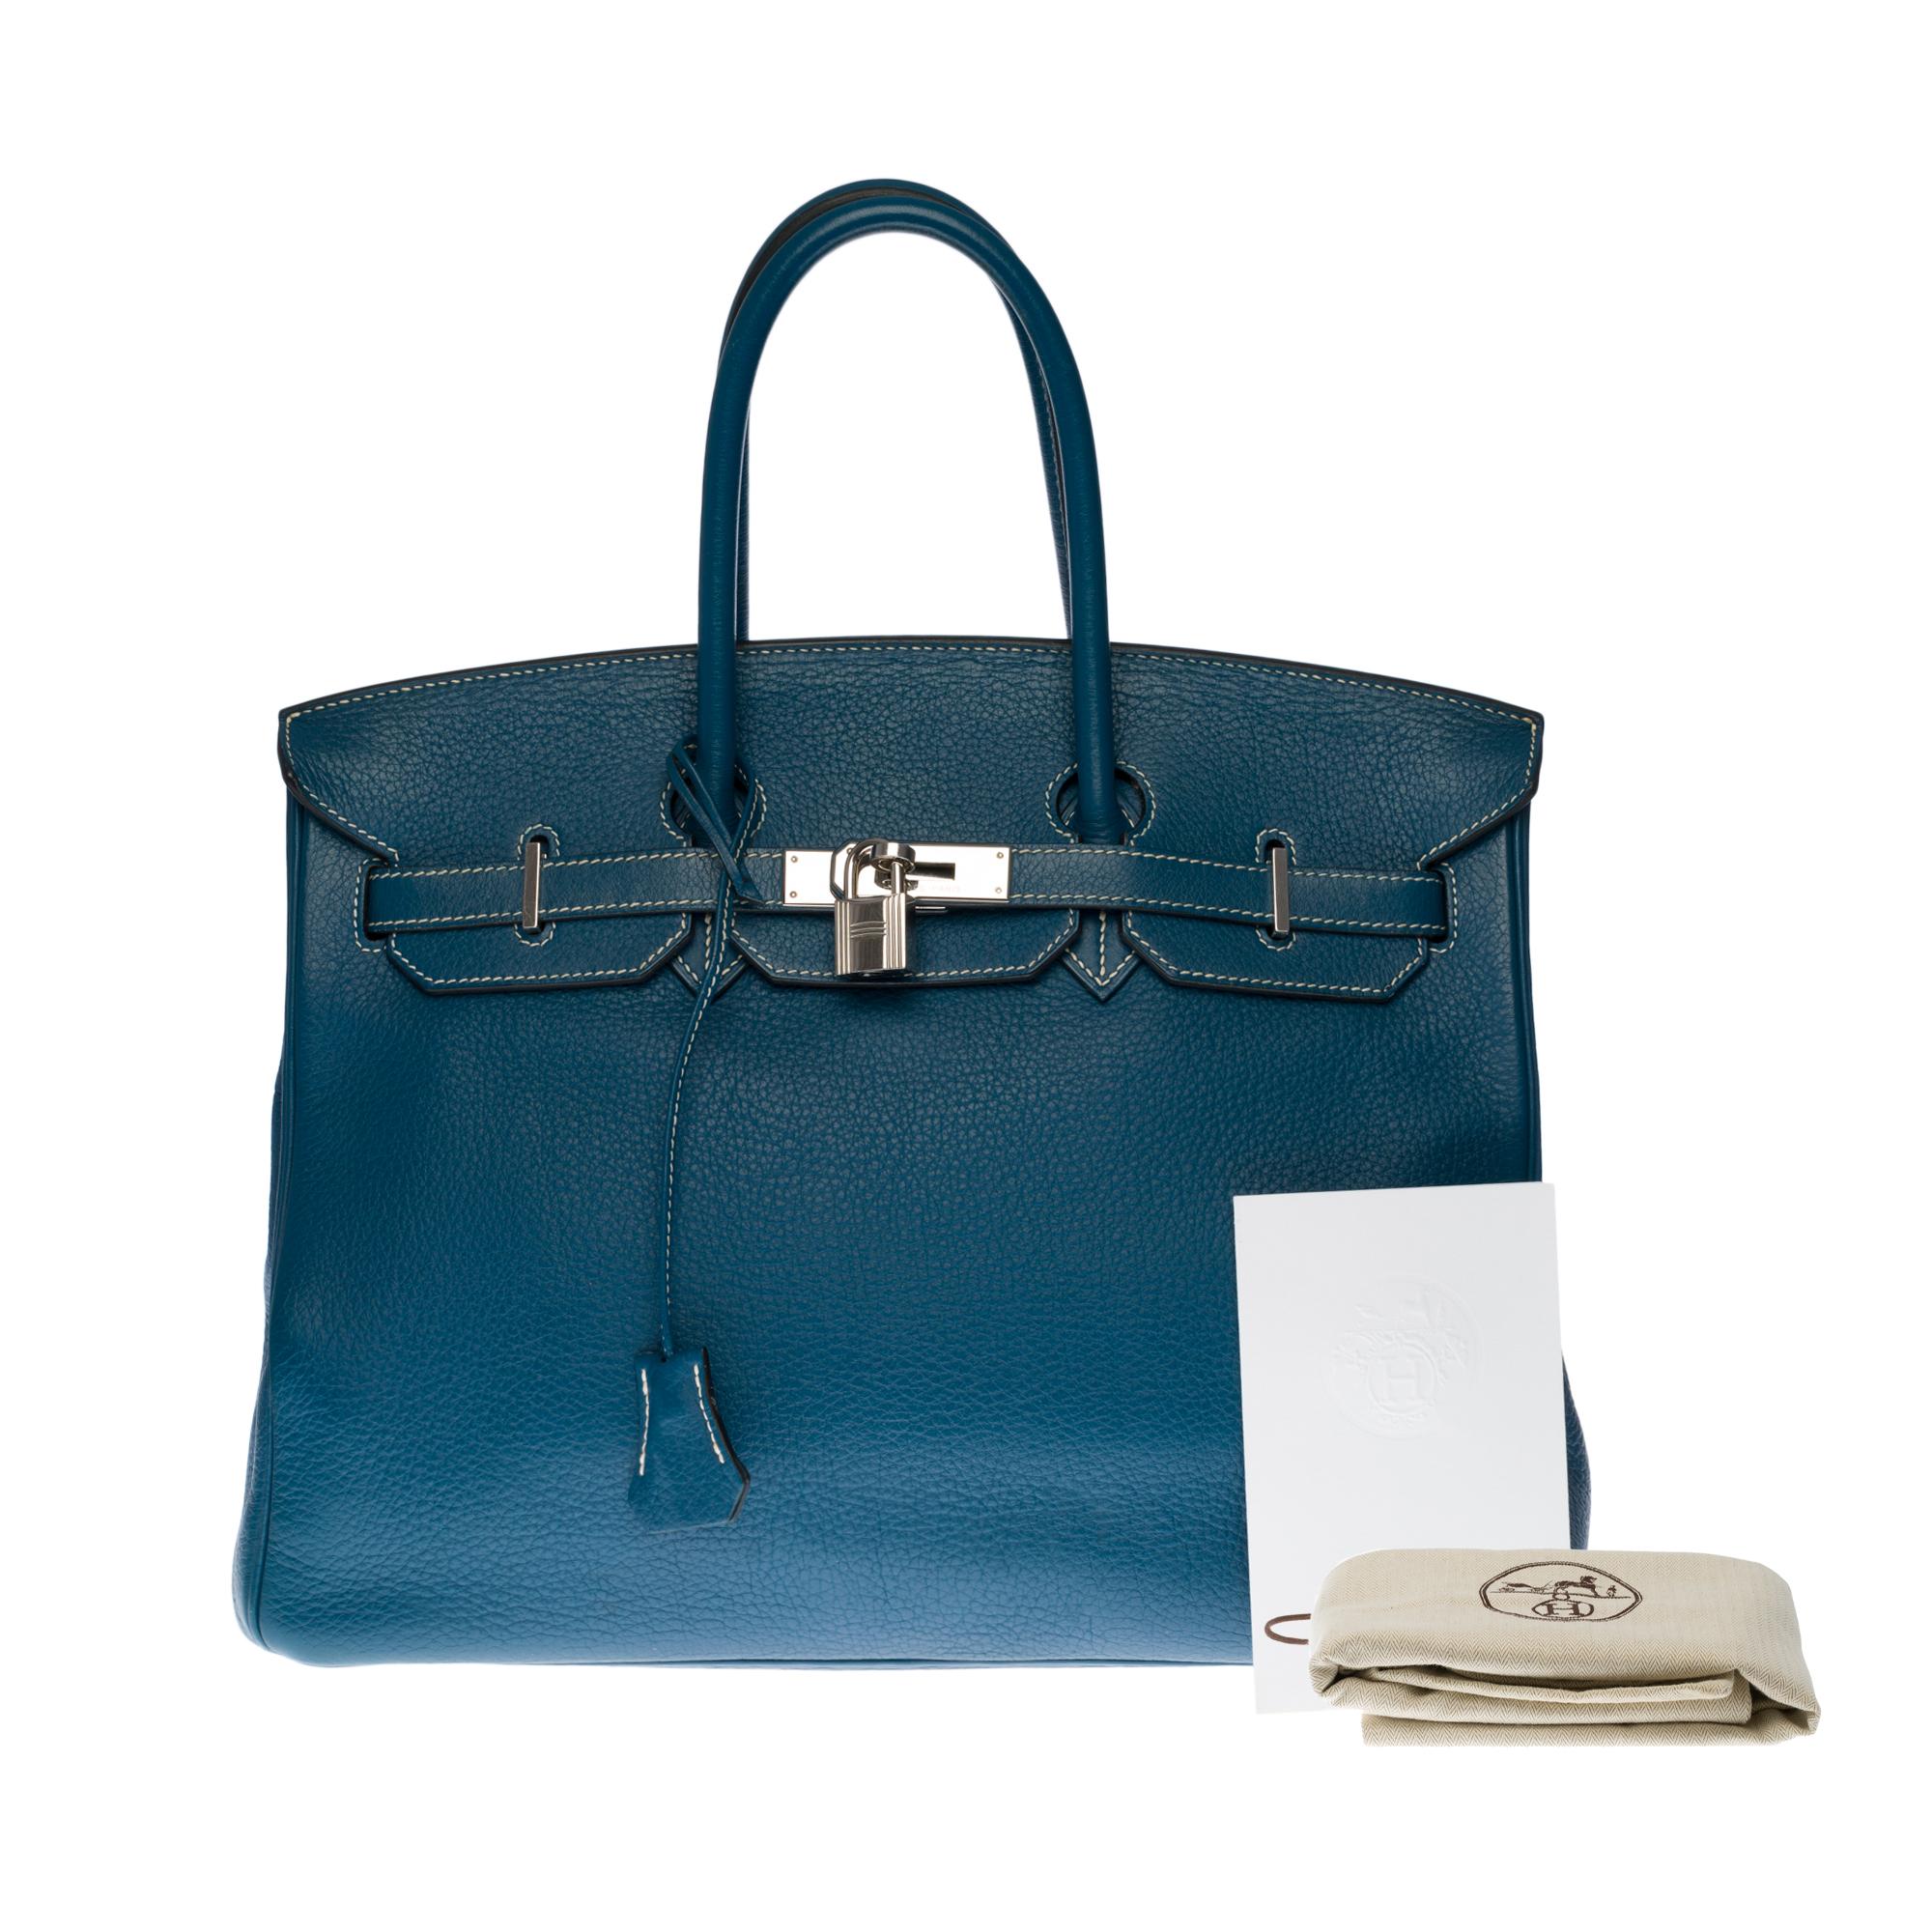 Stunning Hermès Birkin 35 handbag in Blue Thalassa Taurillon leather, SHW 6